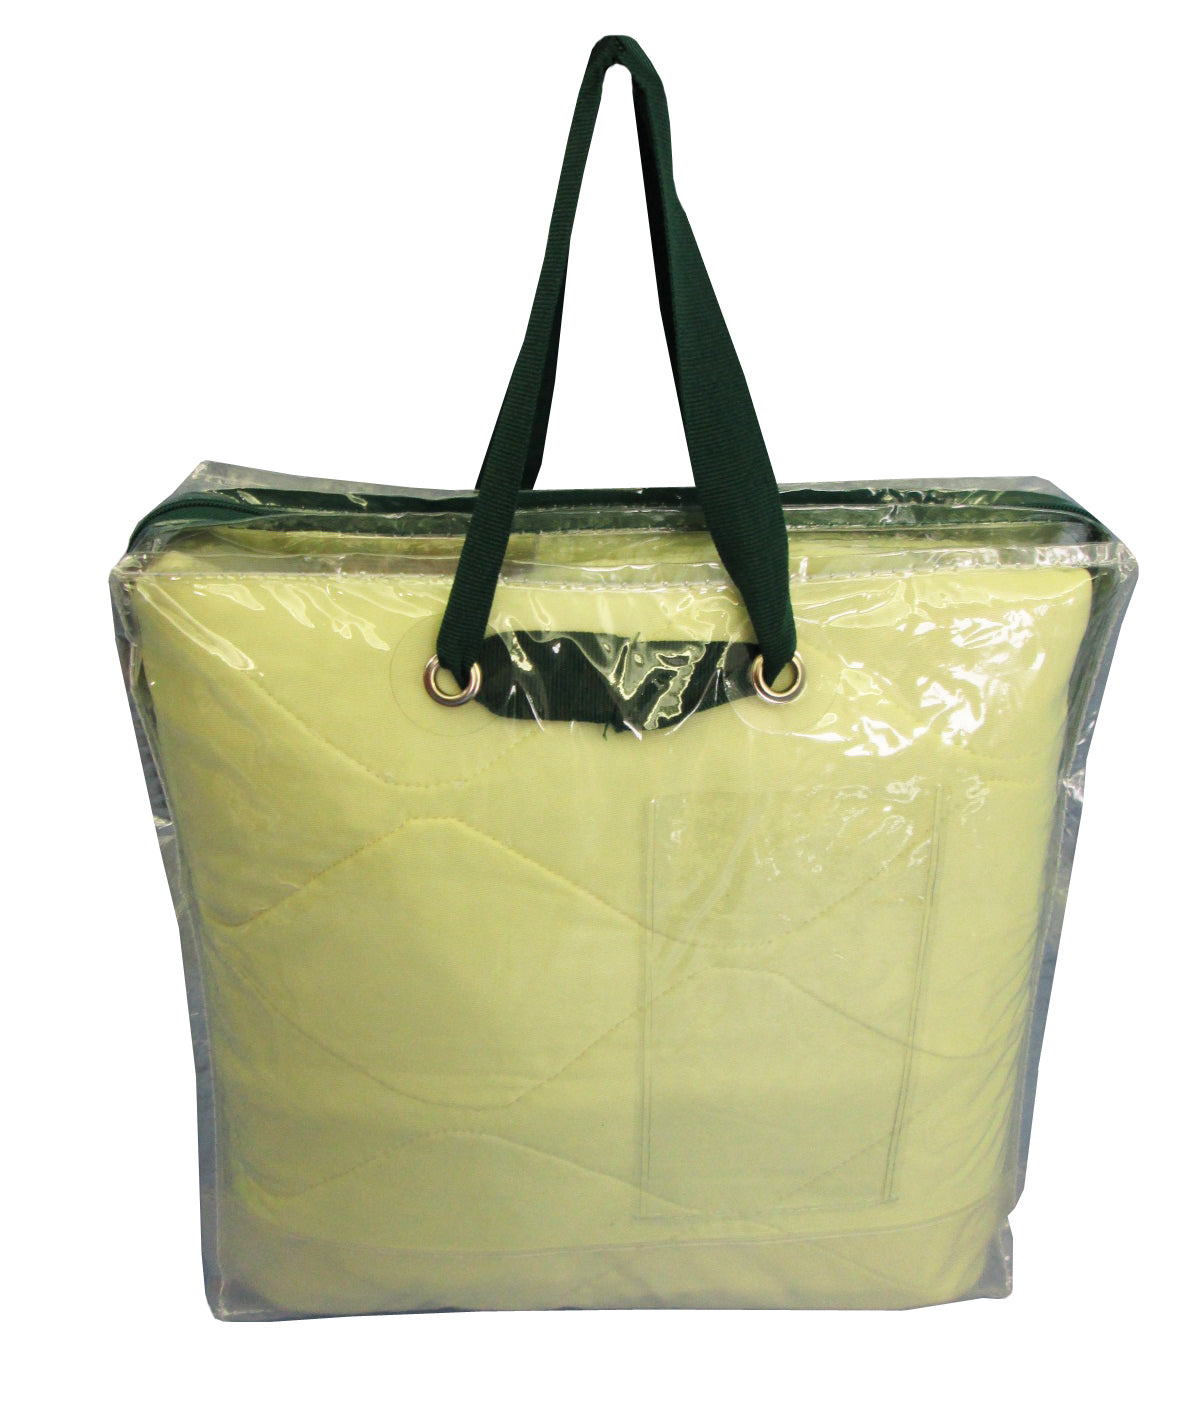 JLSB-0016 Sewn Bag